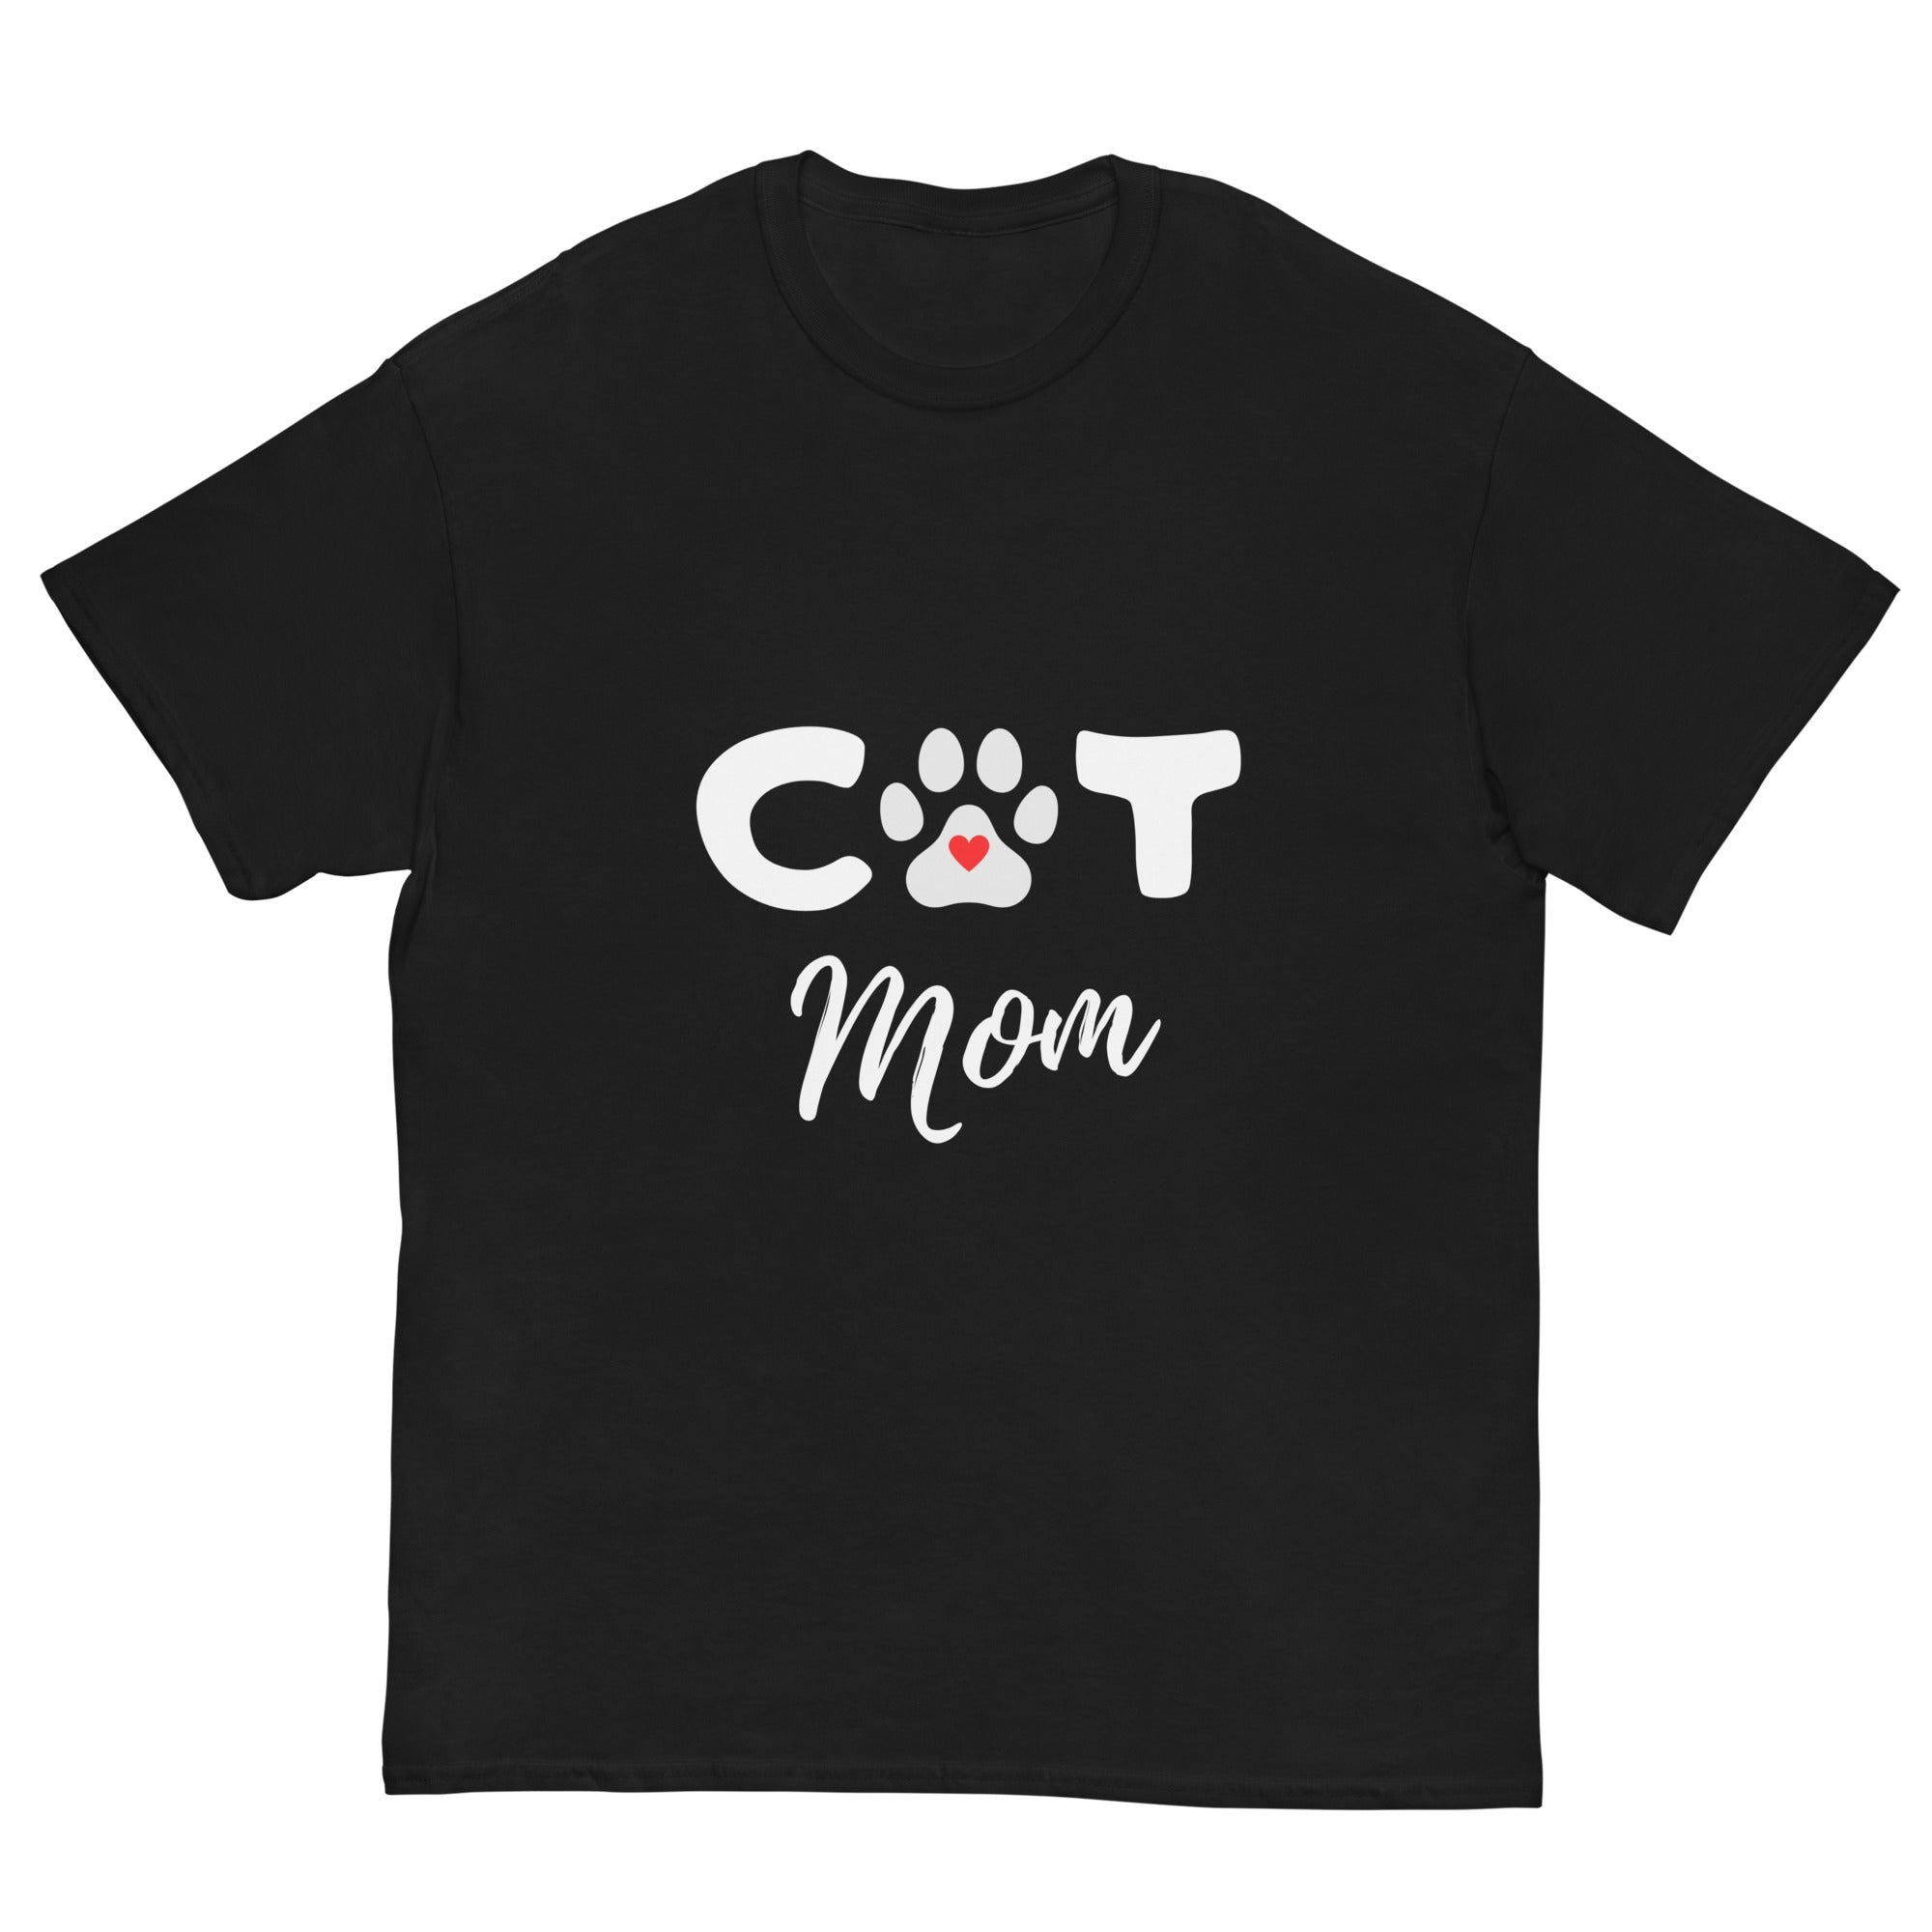 CAT MOM TEE